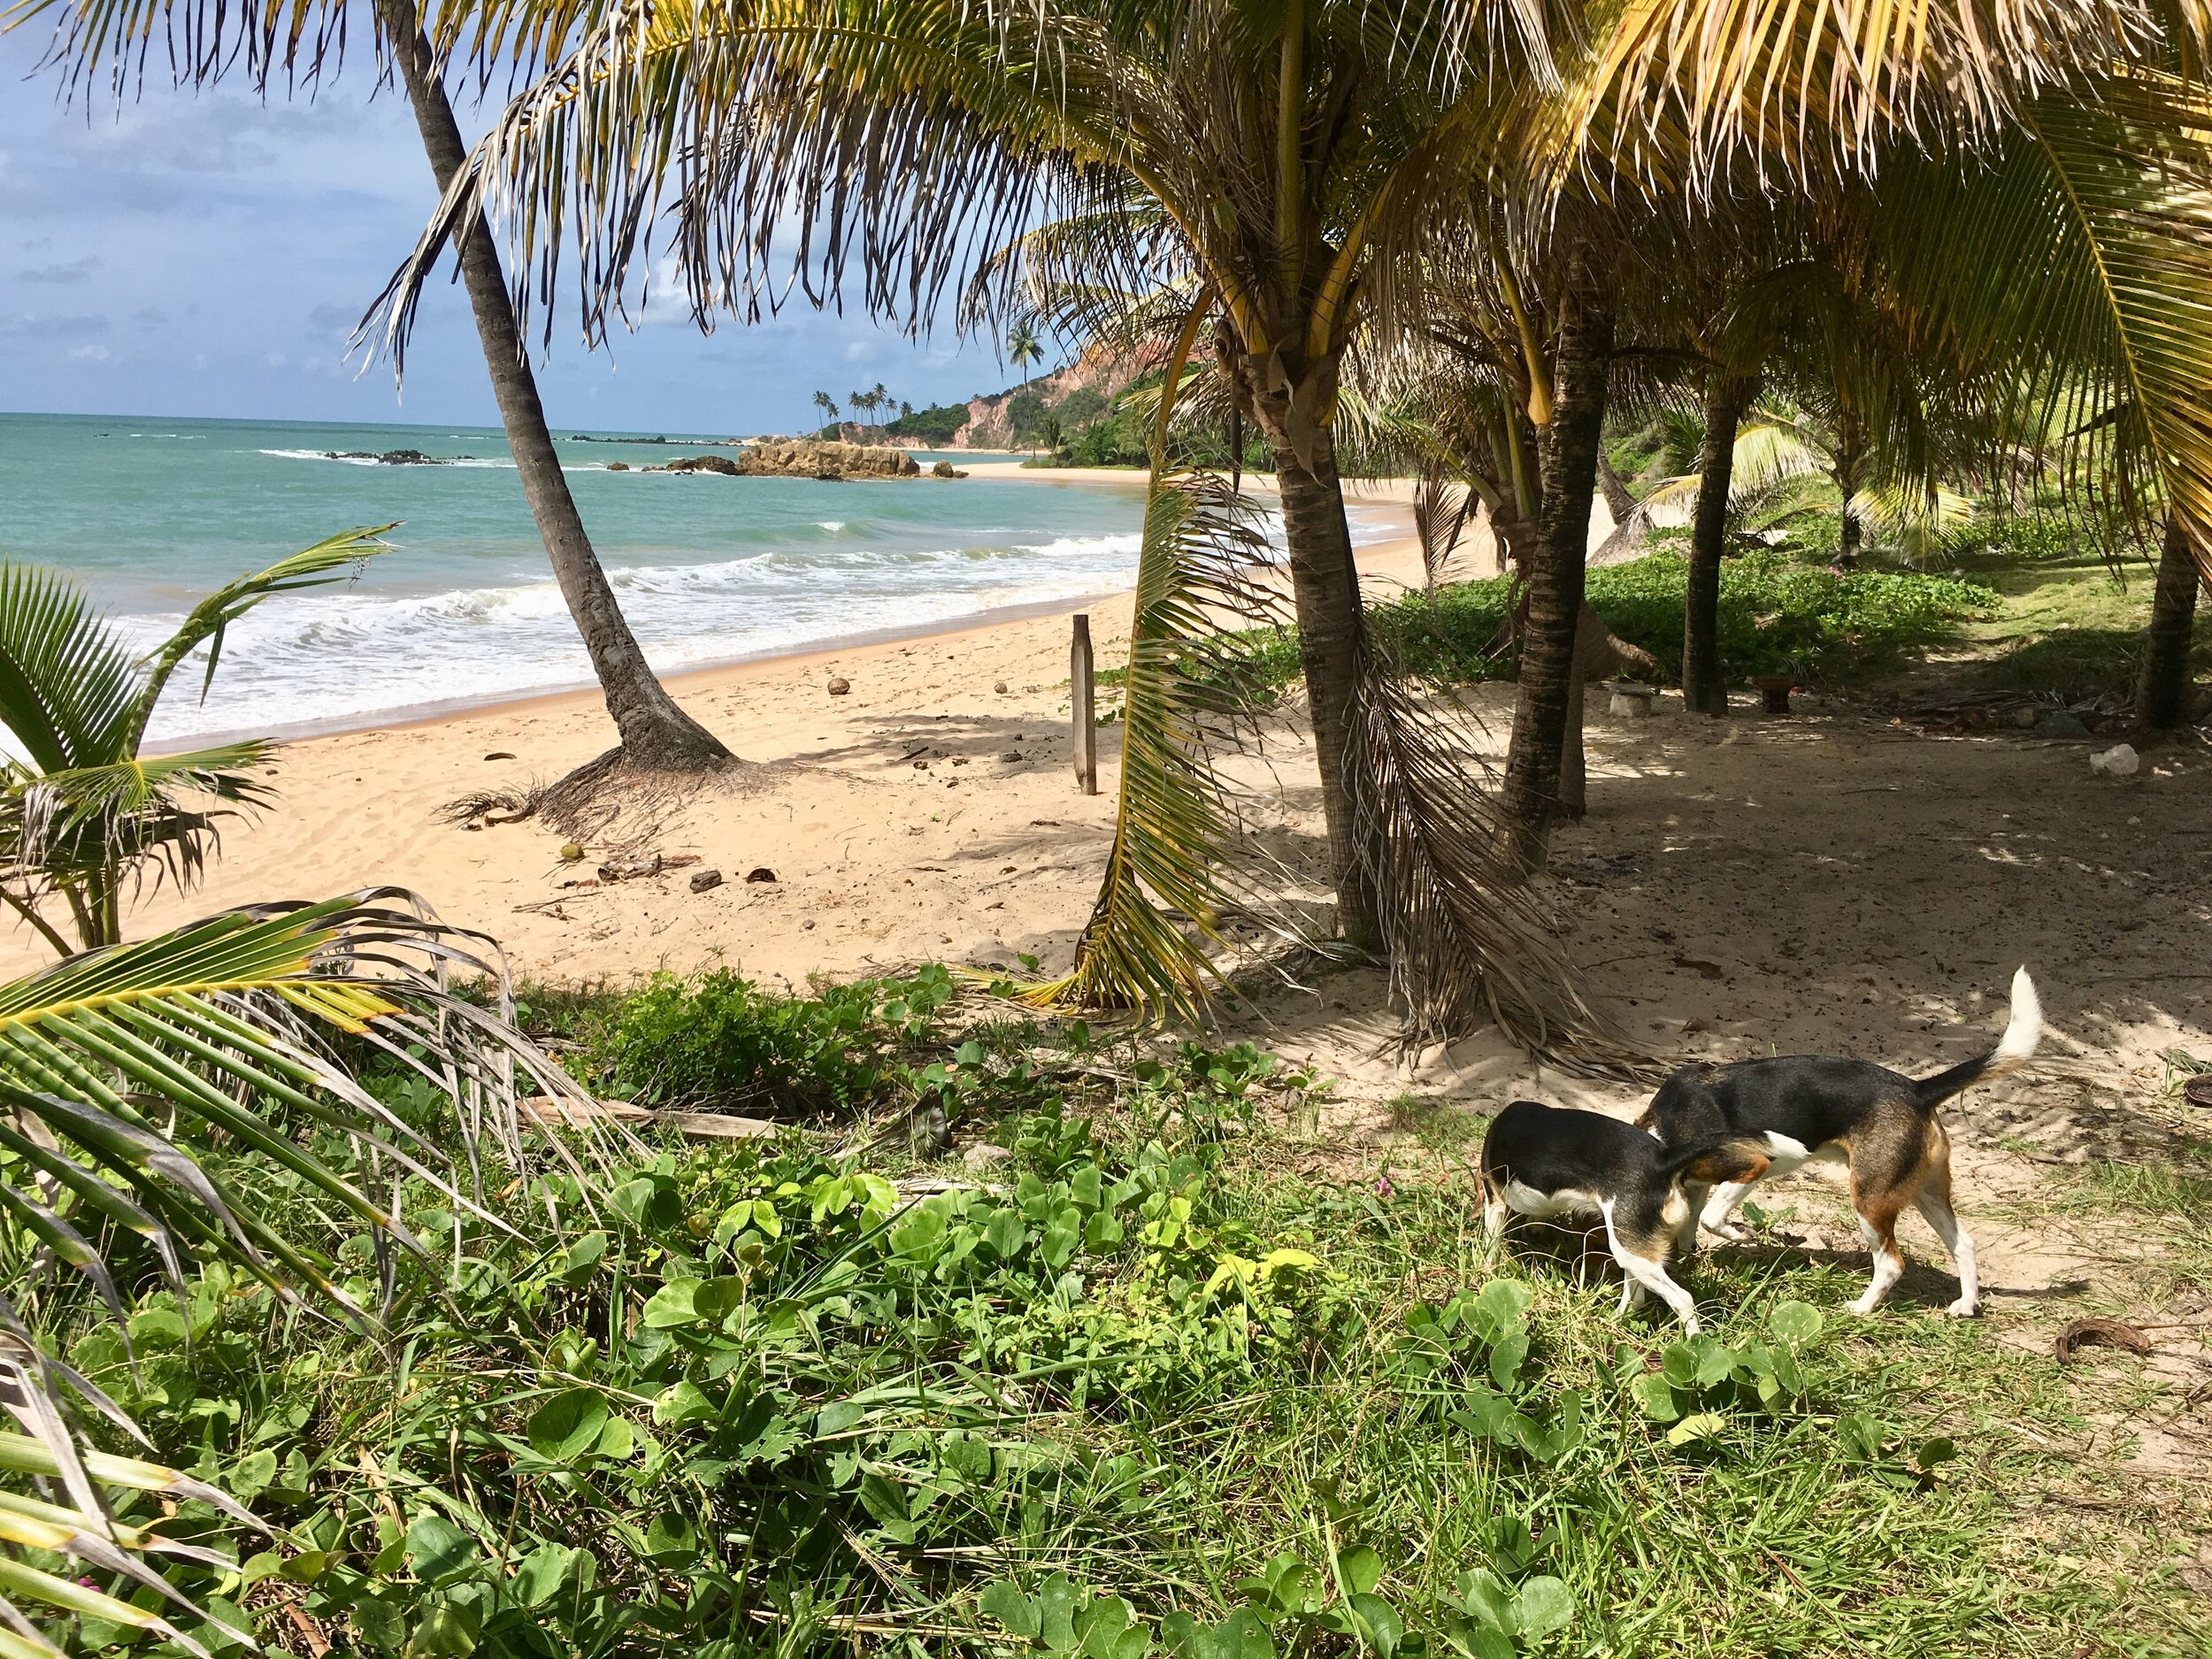 sailing dogs enjoy Beach in Brazil